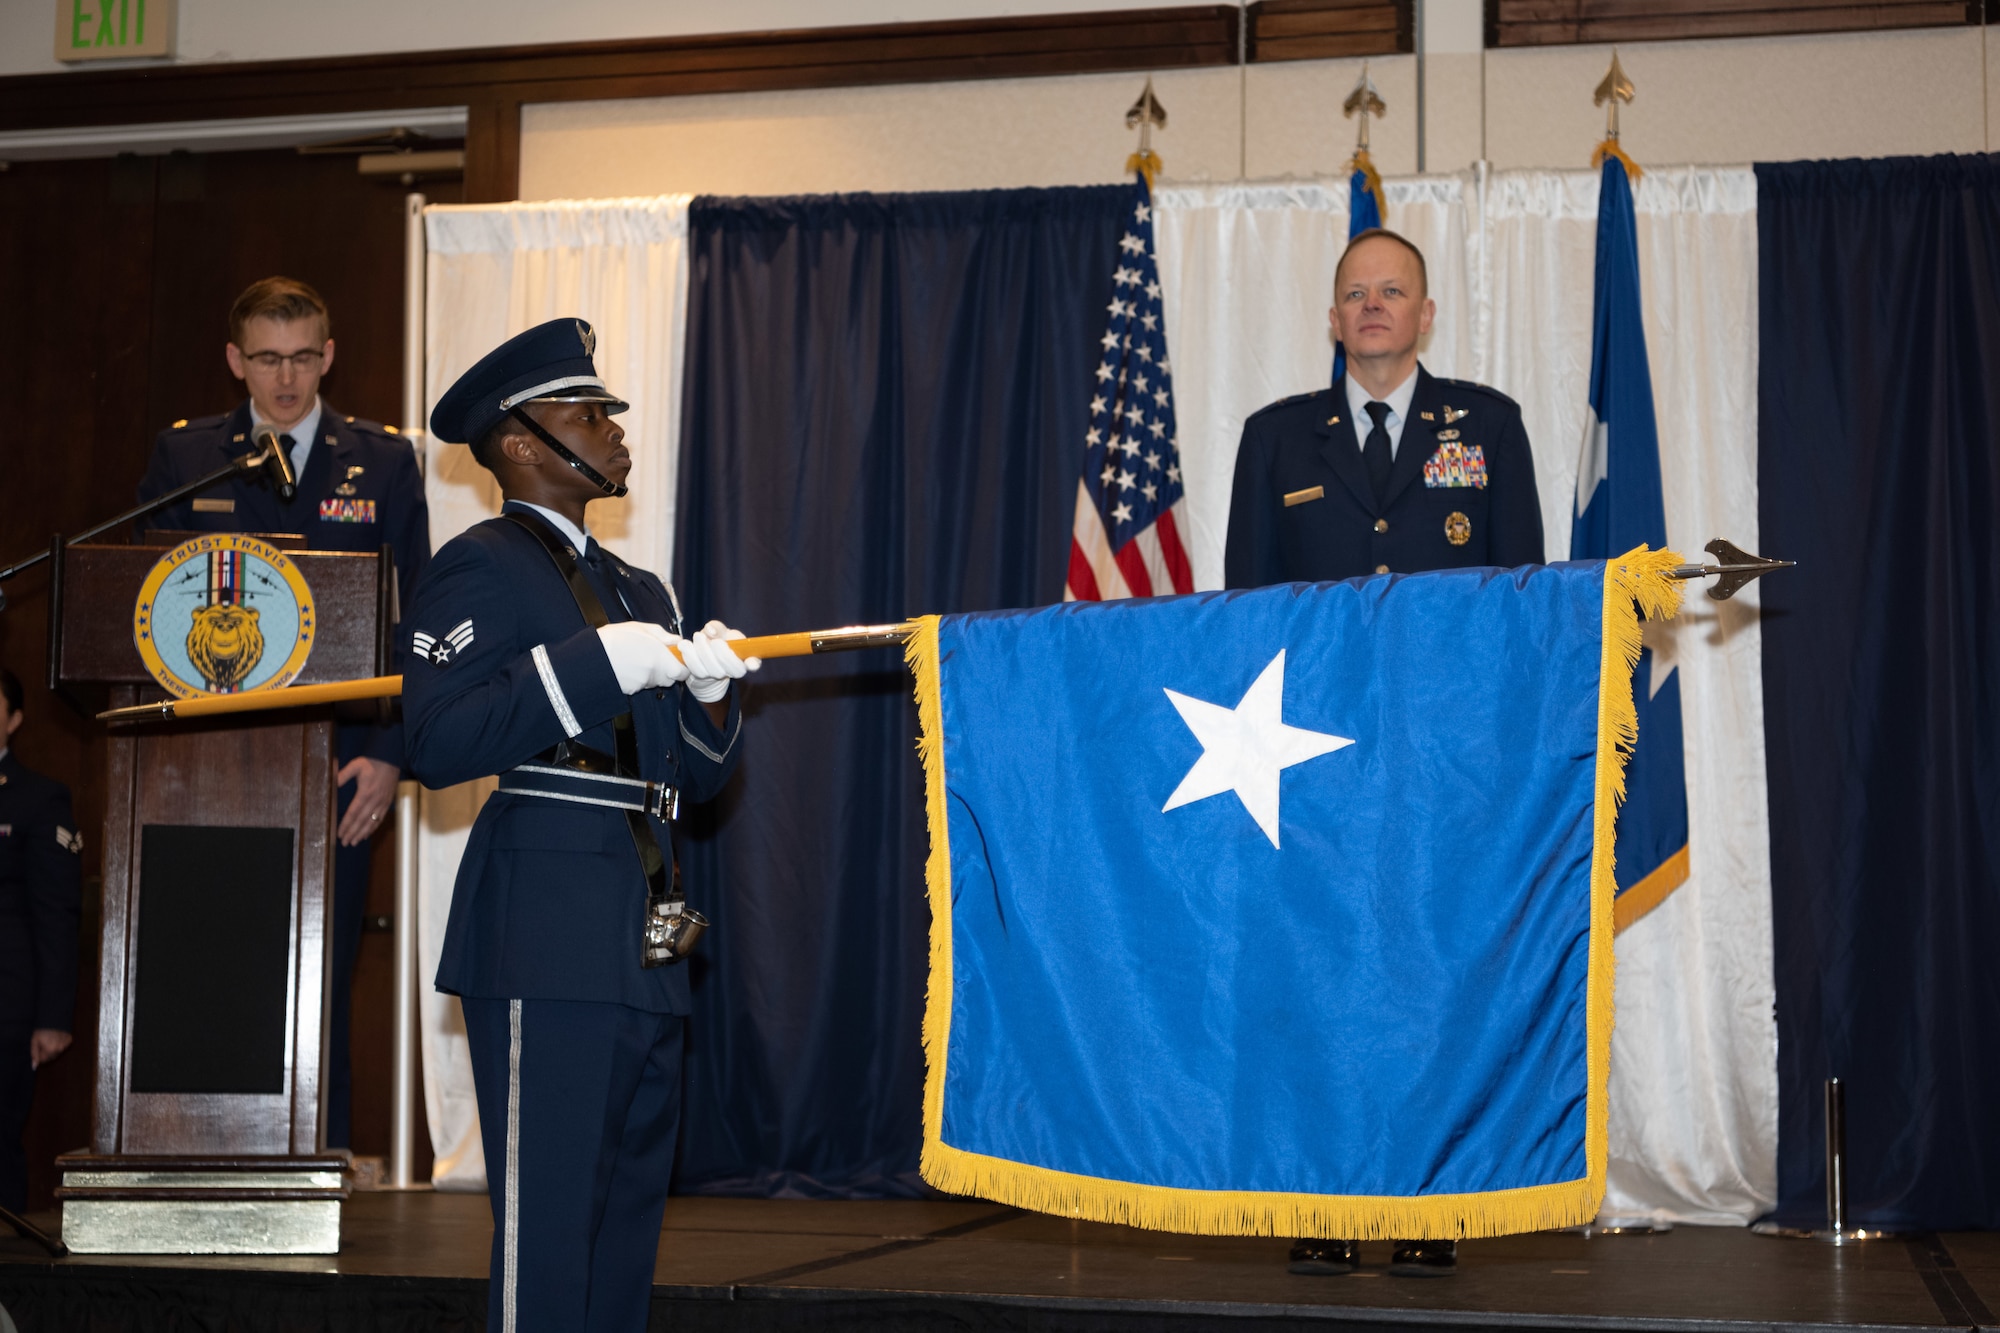 Honor guard presents personal flag to Salmi.